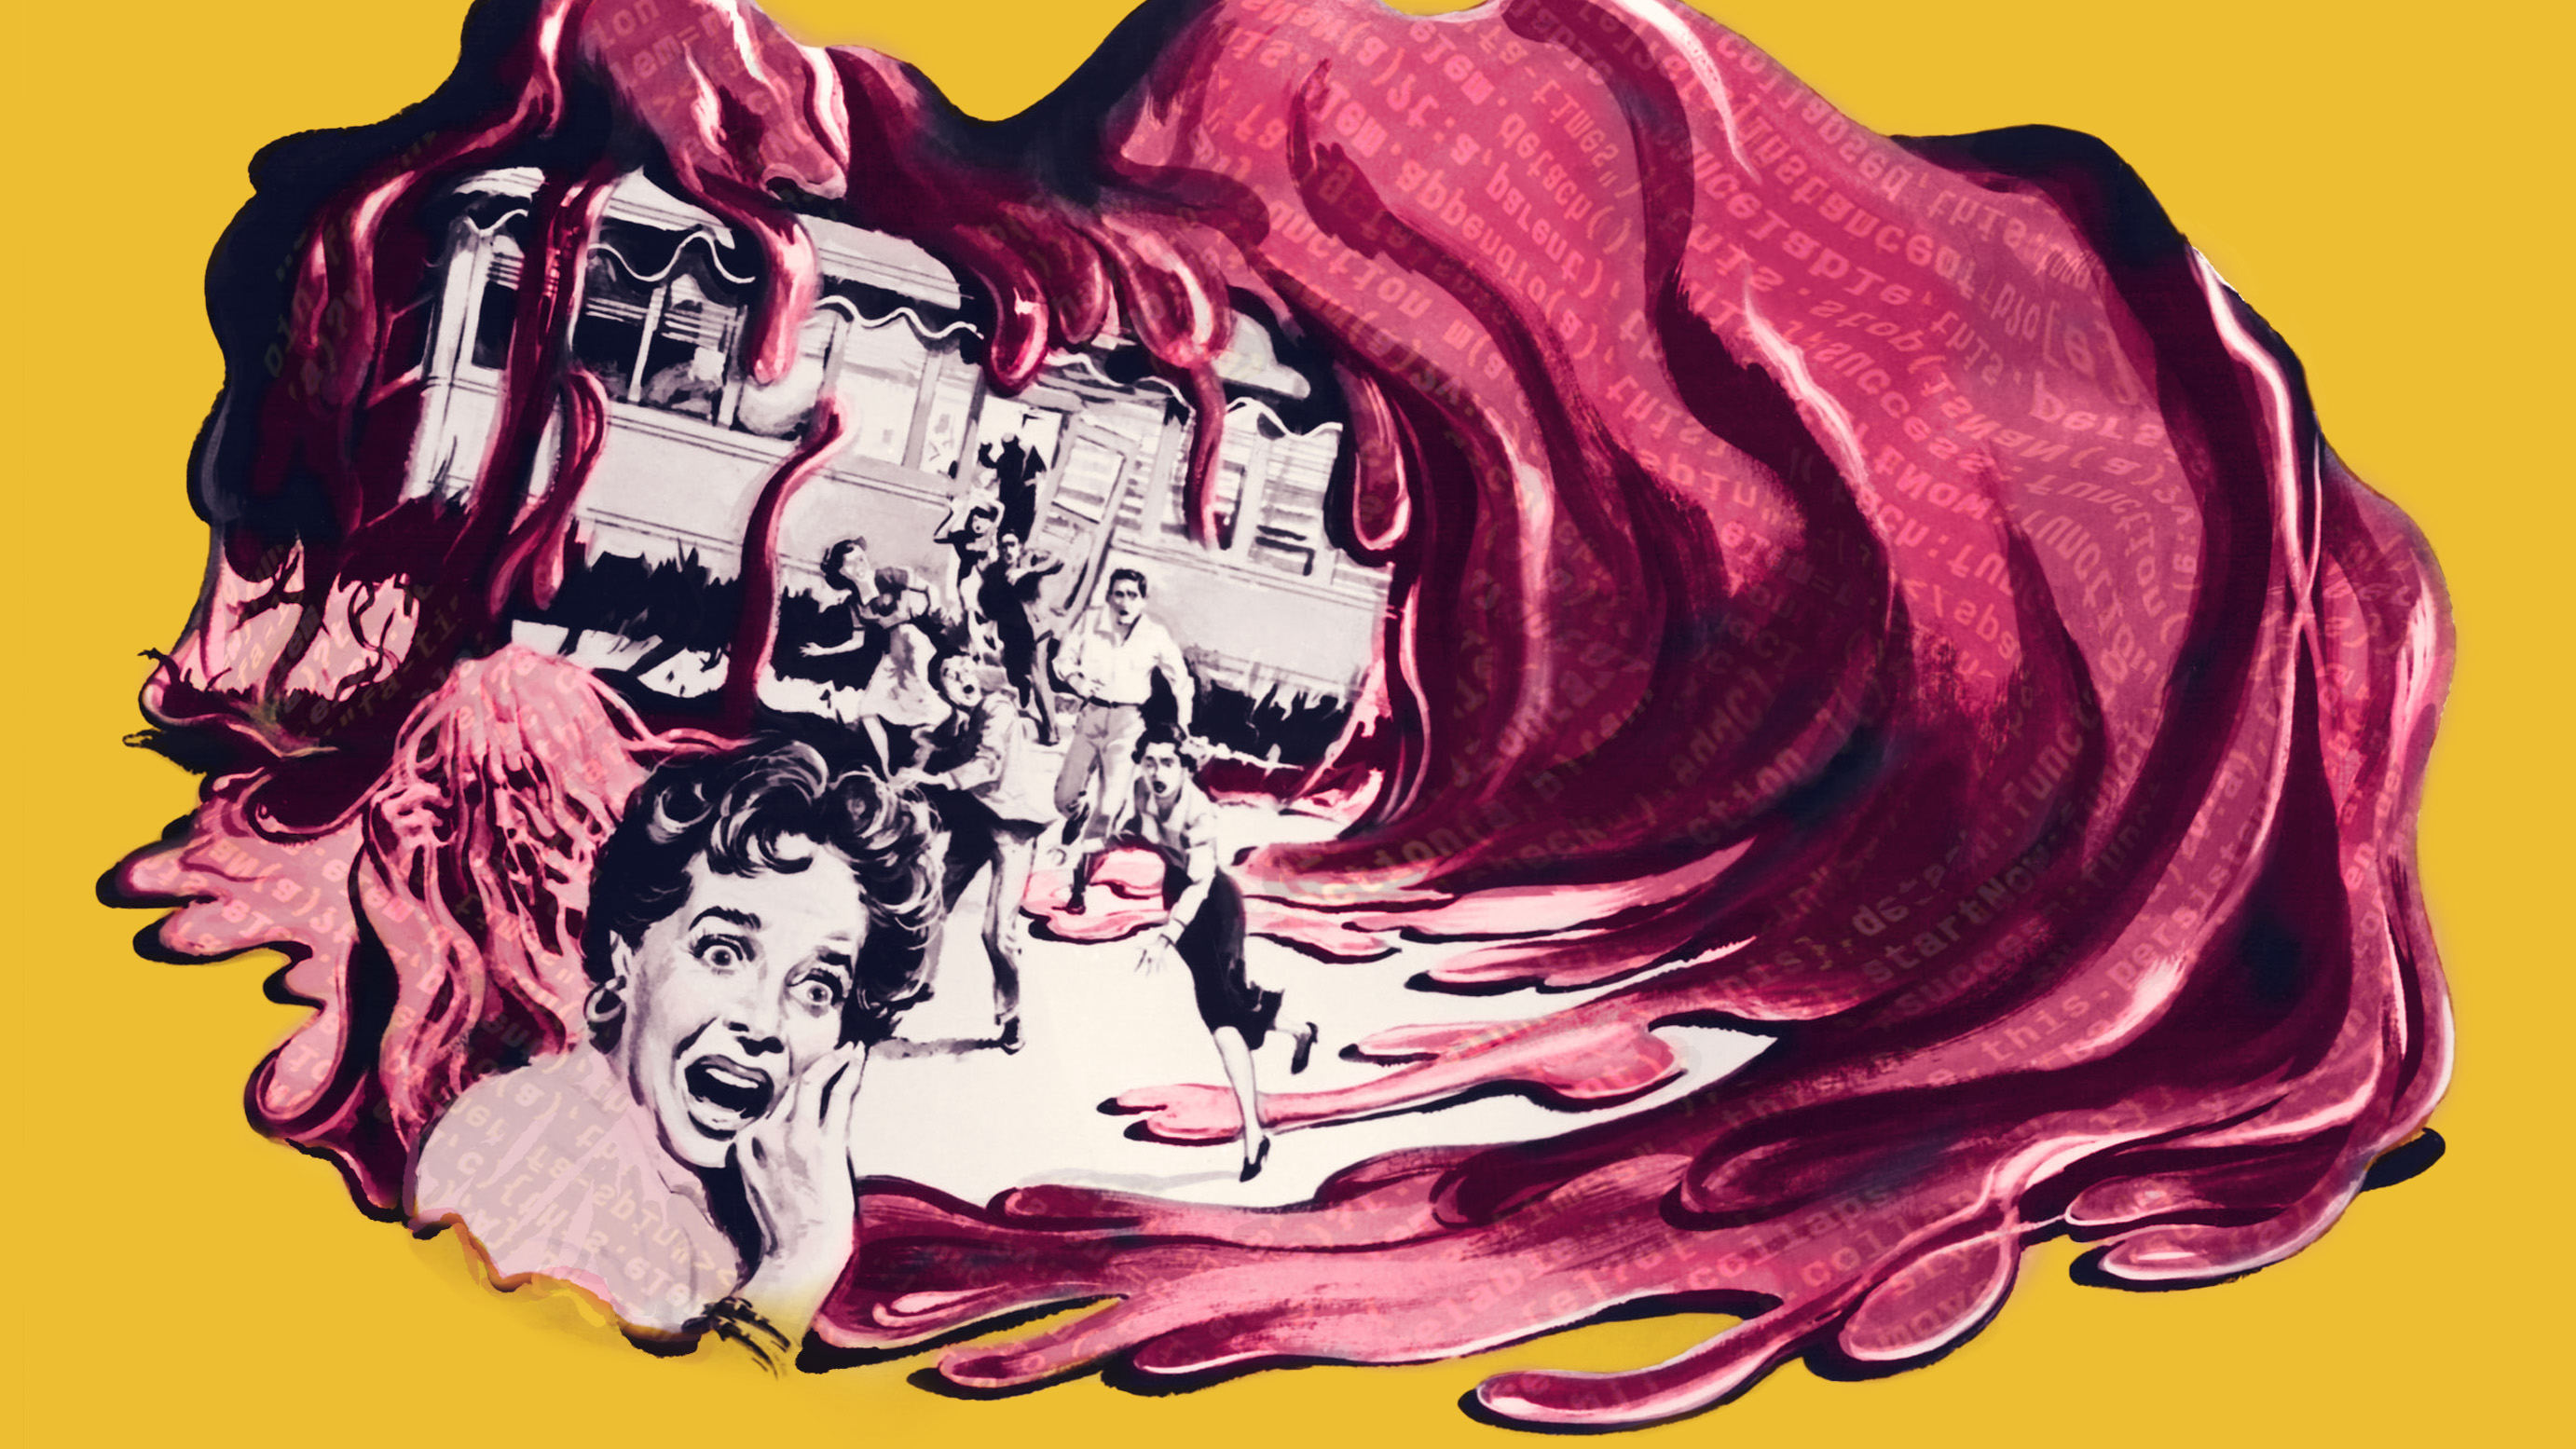 THE BLOB, 1958, promotional artwork